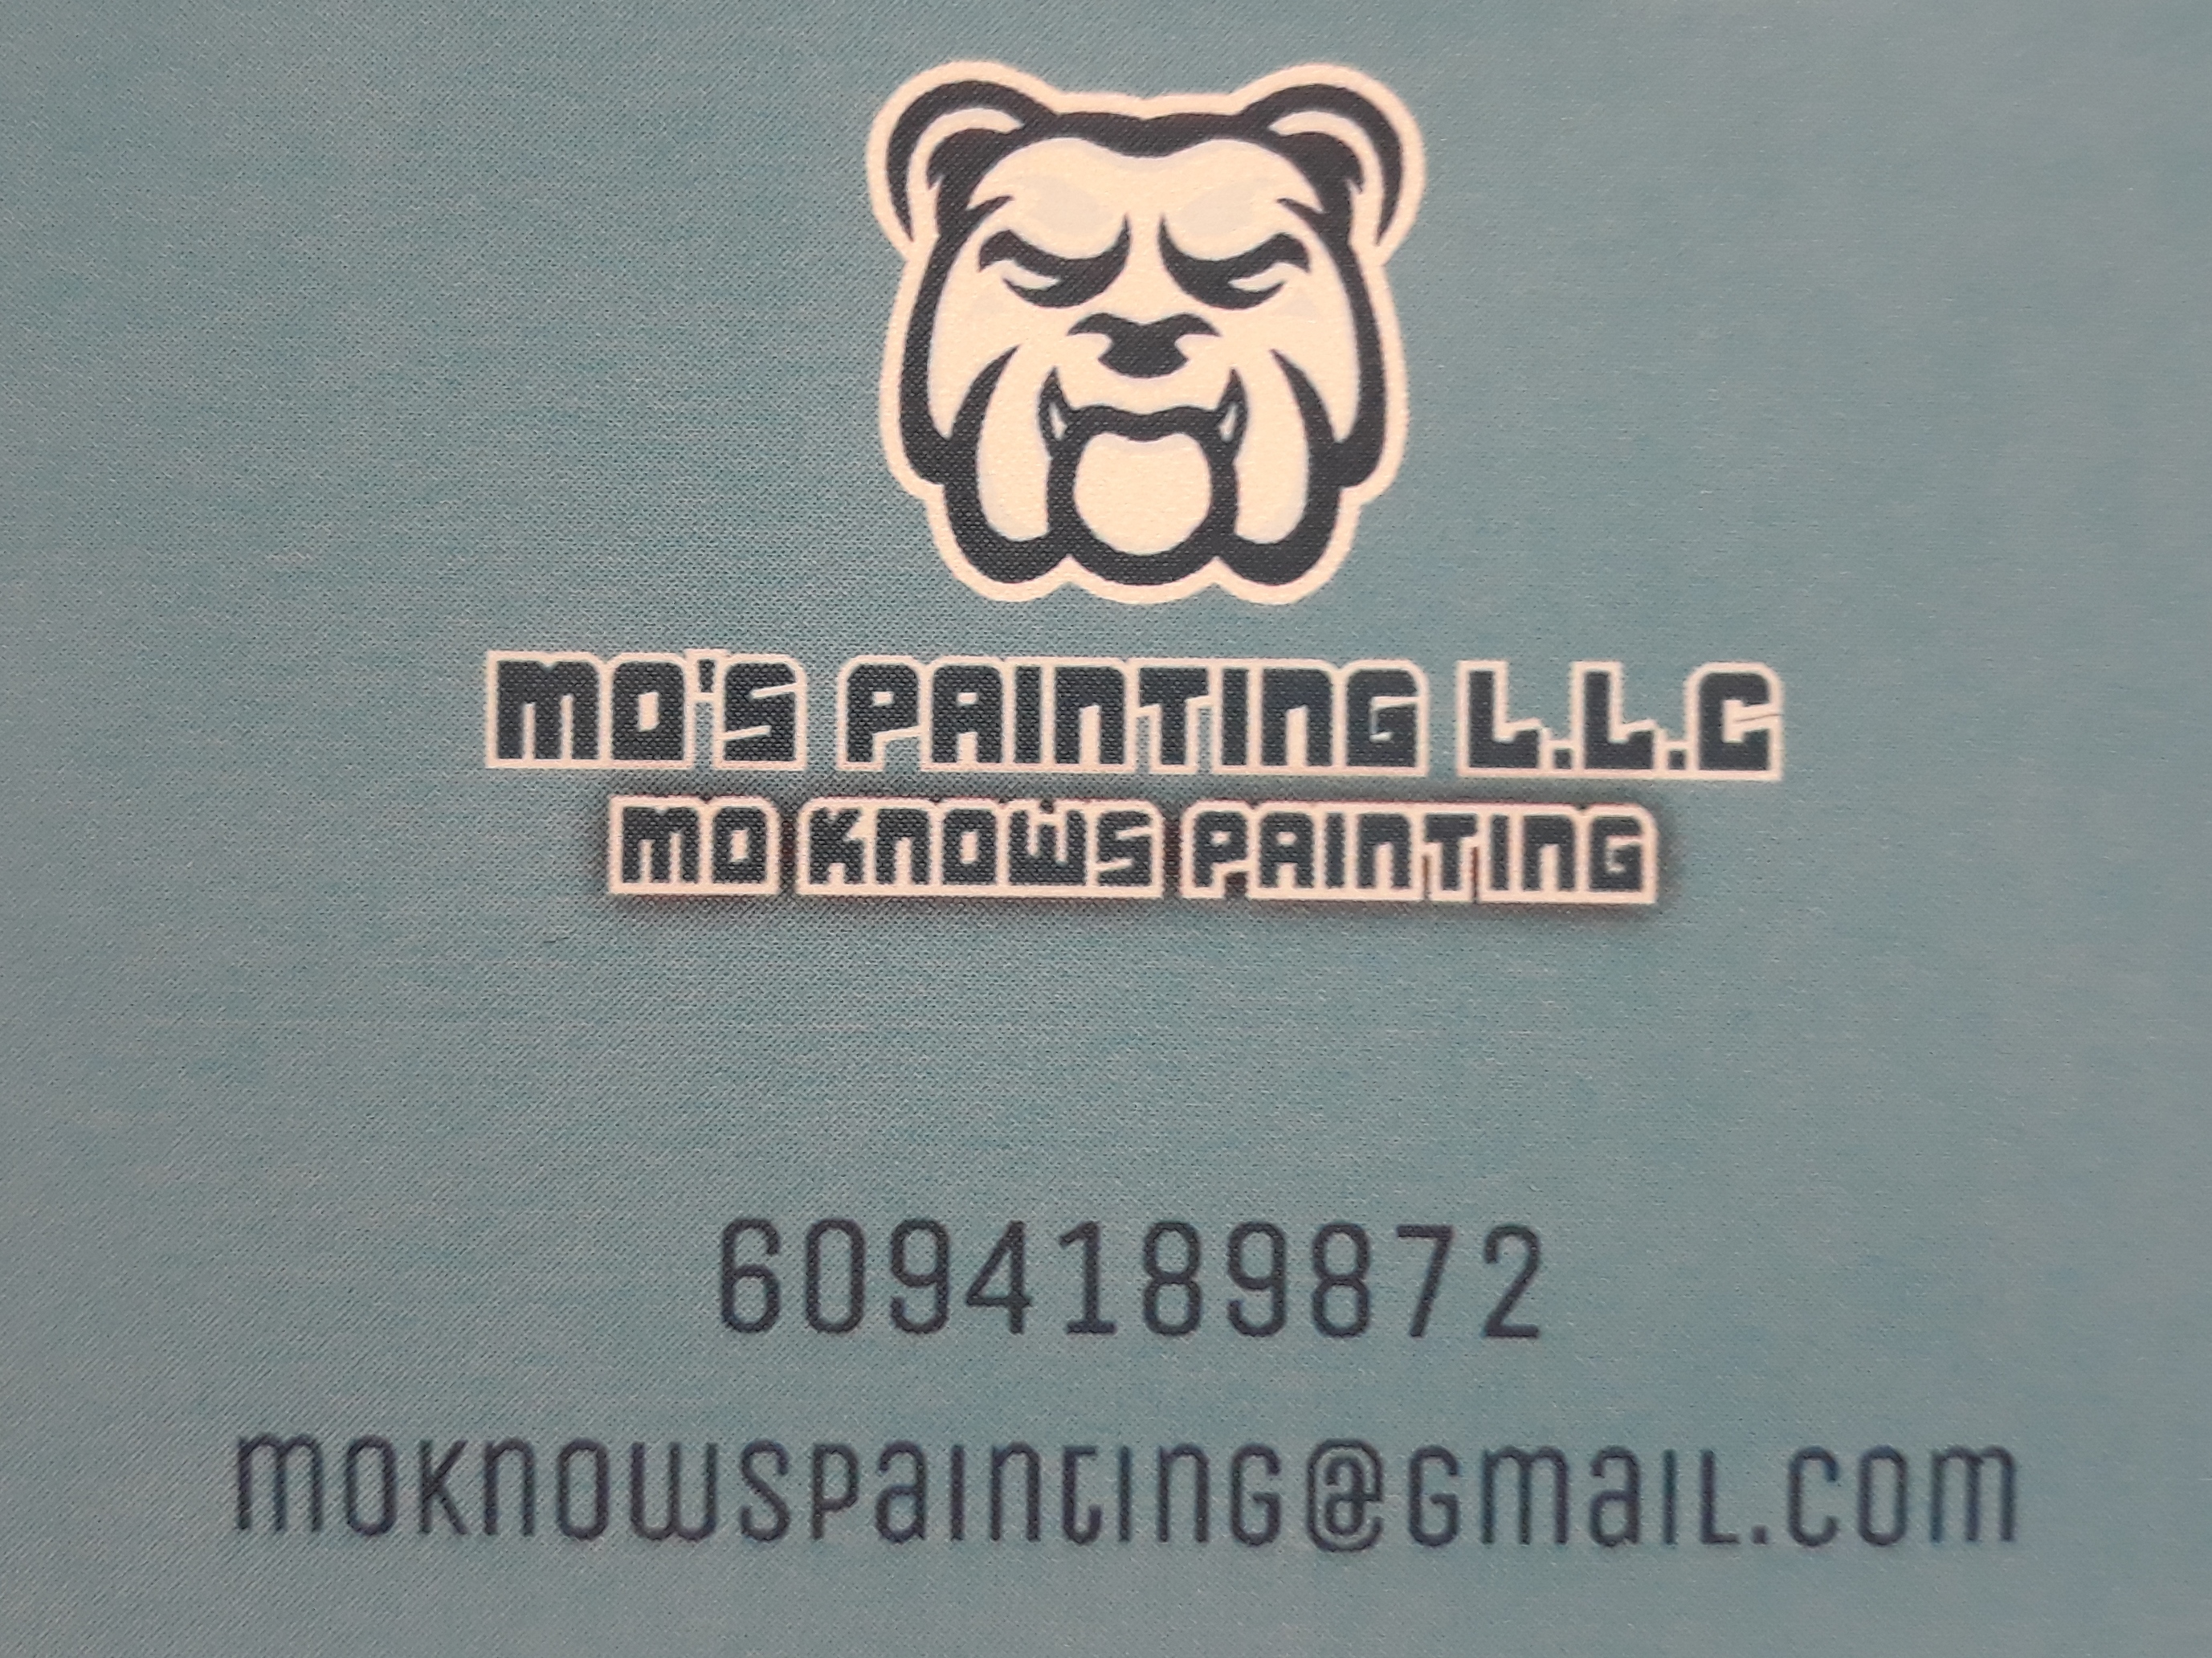 Mo's Painting, LLC Logo